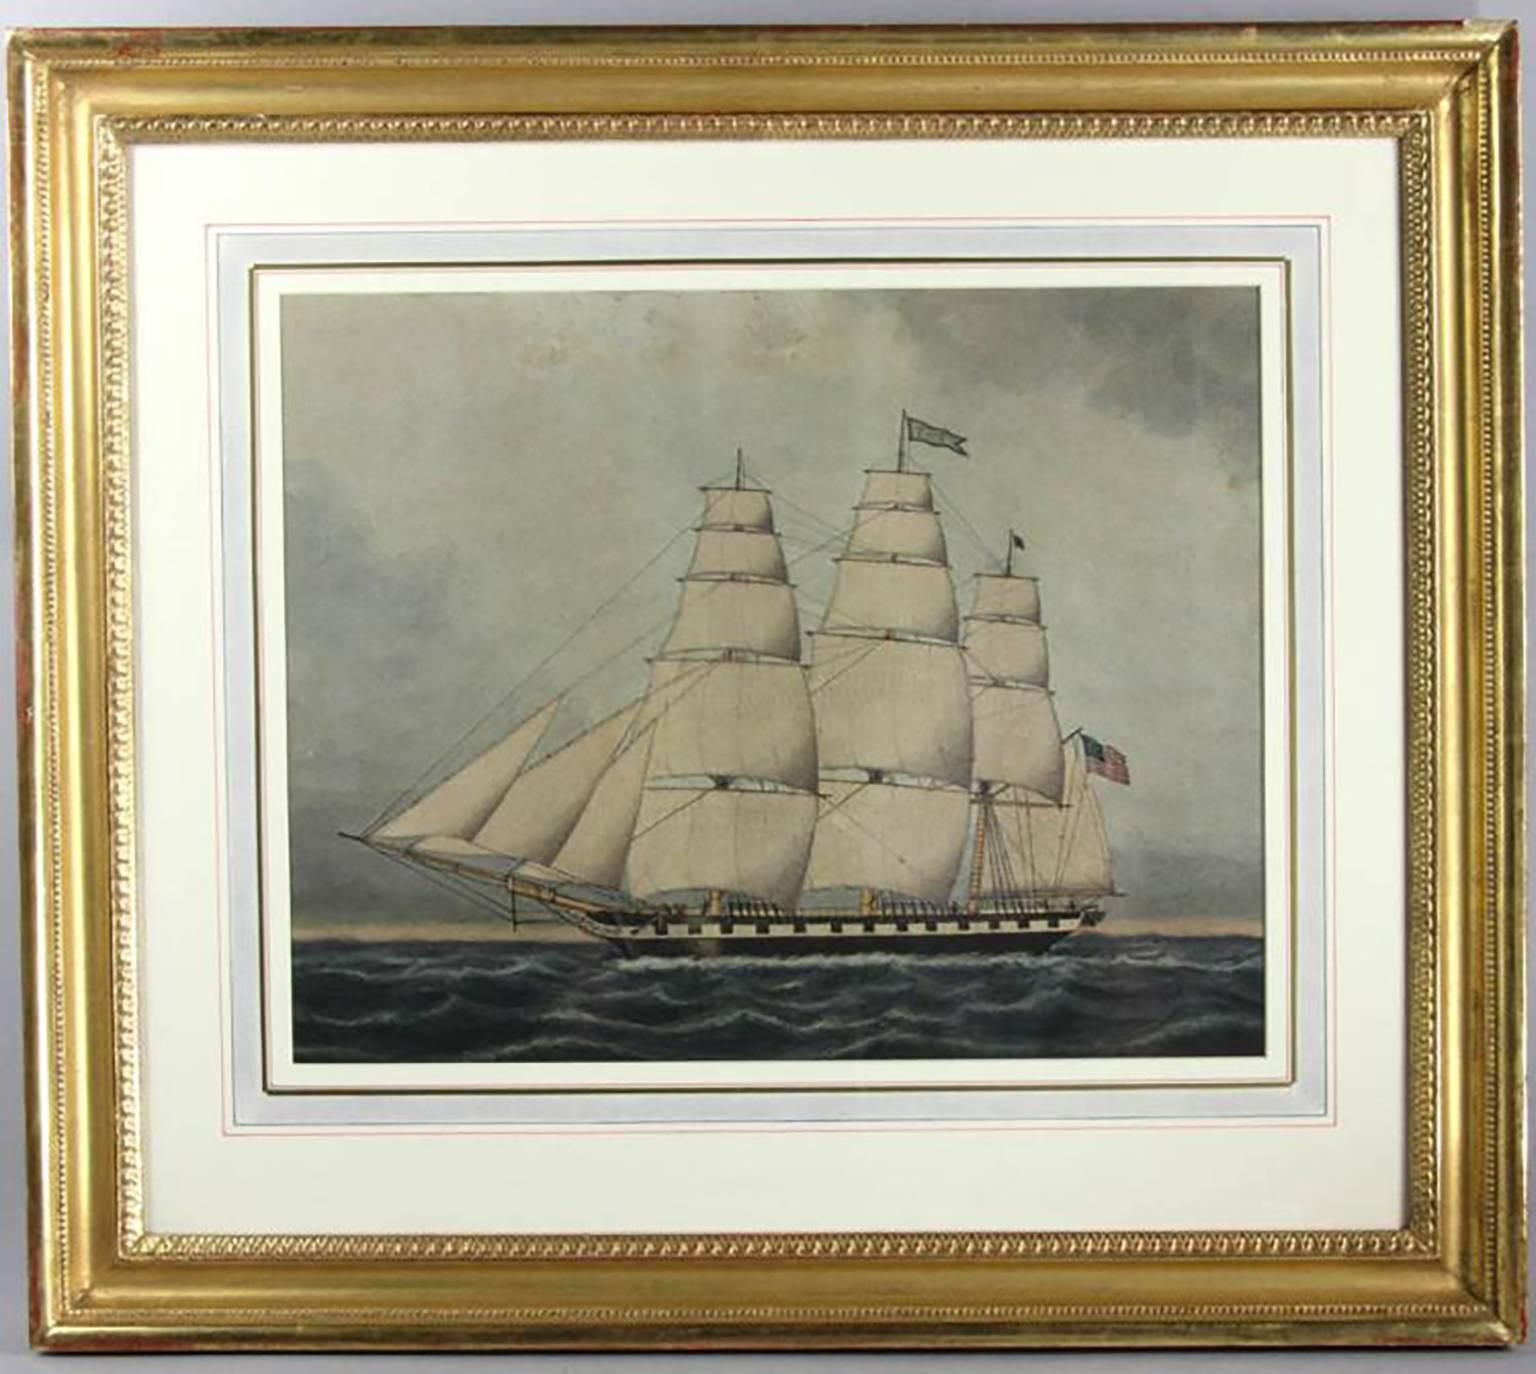 Jurgen Frederick Huge Landscape Art - 19th C. Marine Watercolor Painting of an American Clipper Ship by Jurgen F. Huge